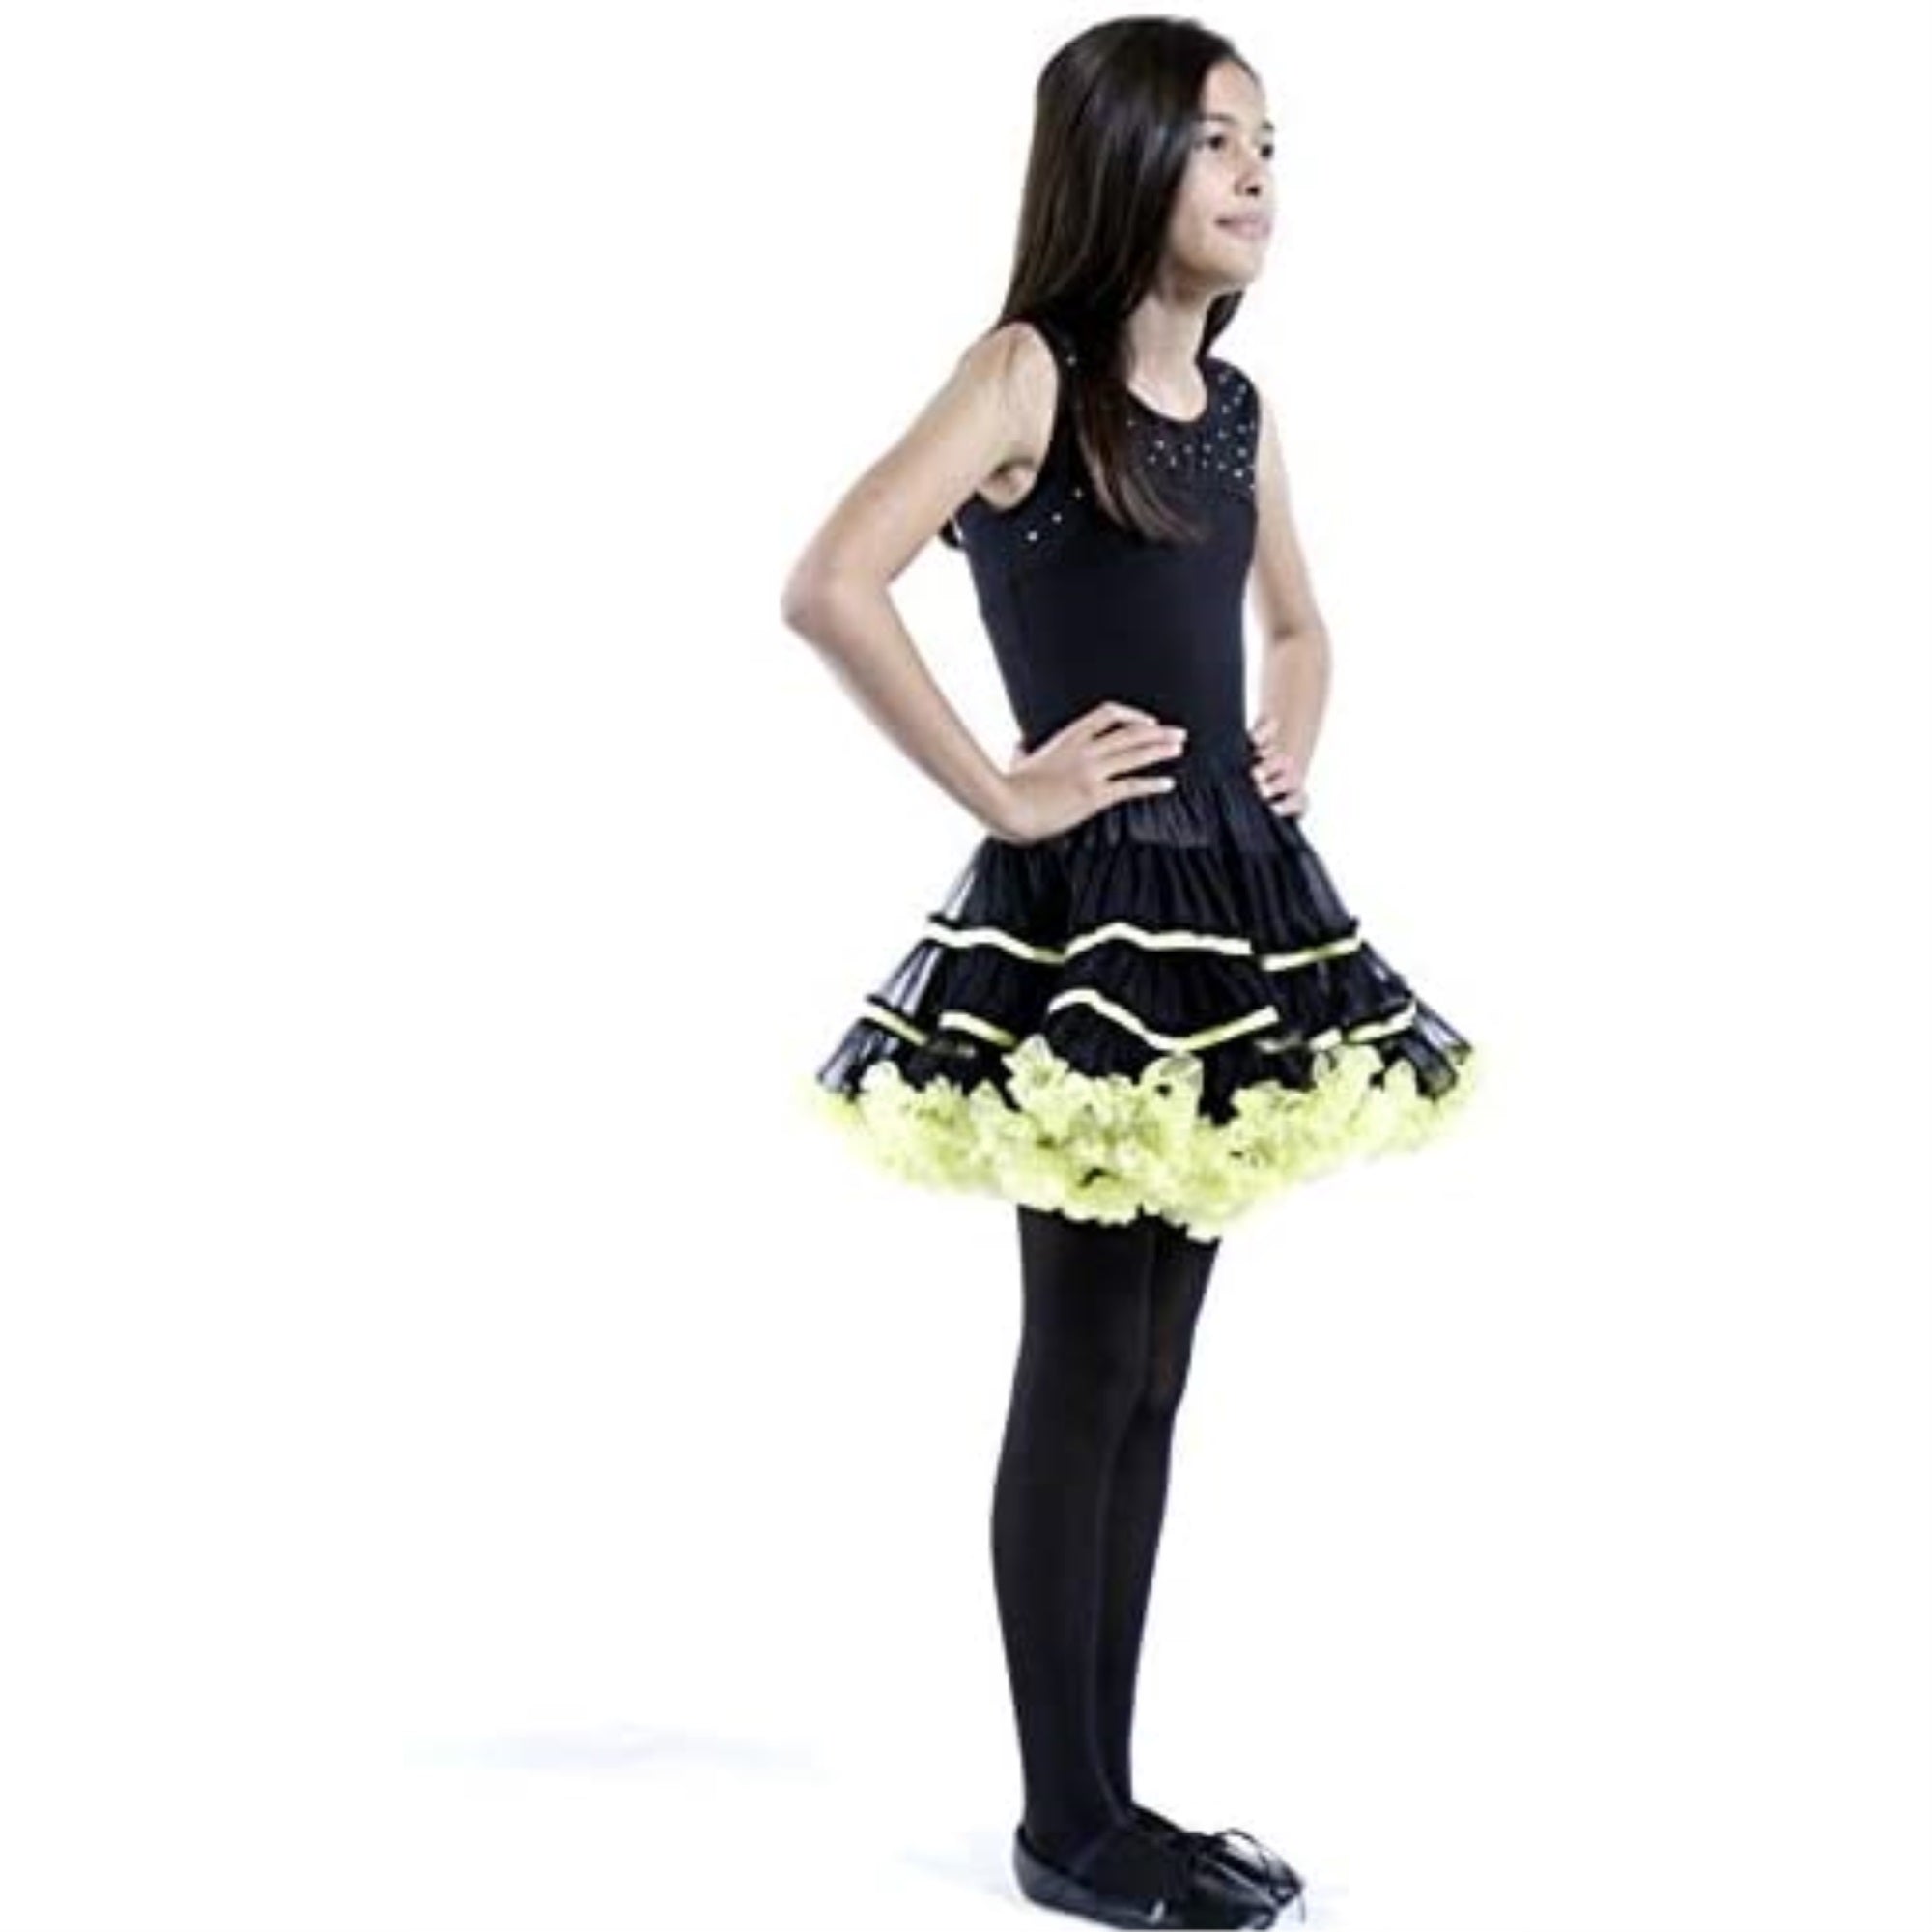 Adult Tulle Costume Petticoat - Black/Yellow